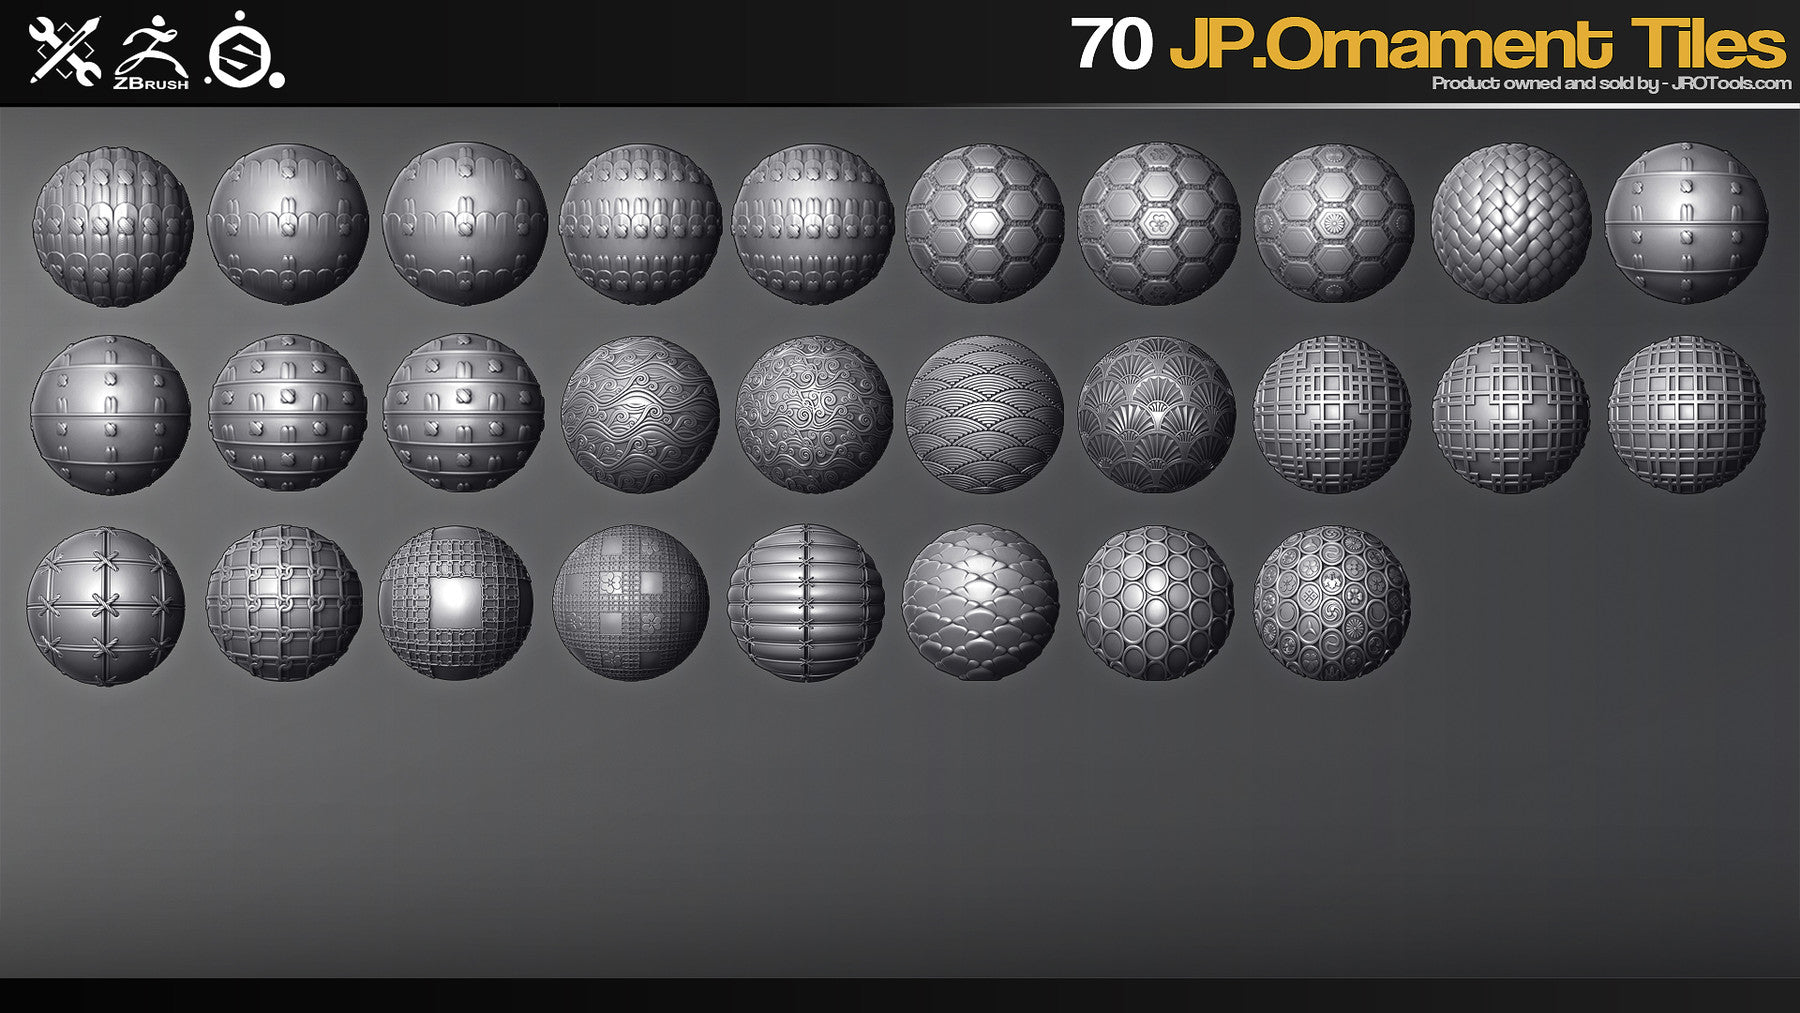 ZBrush/SP - 70 JP.Ornament Tiles